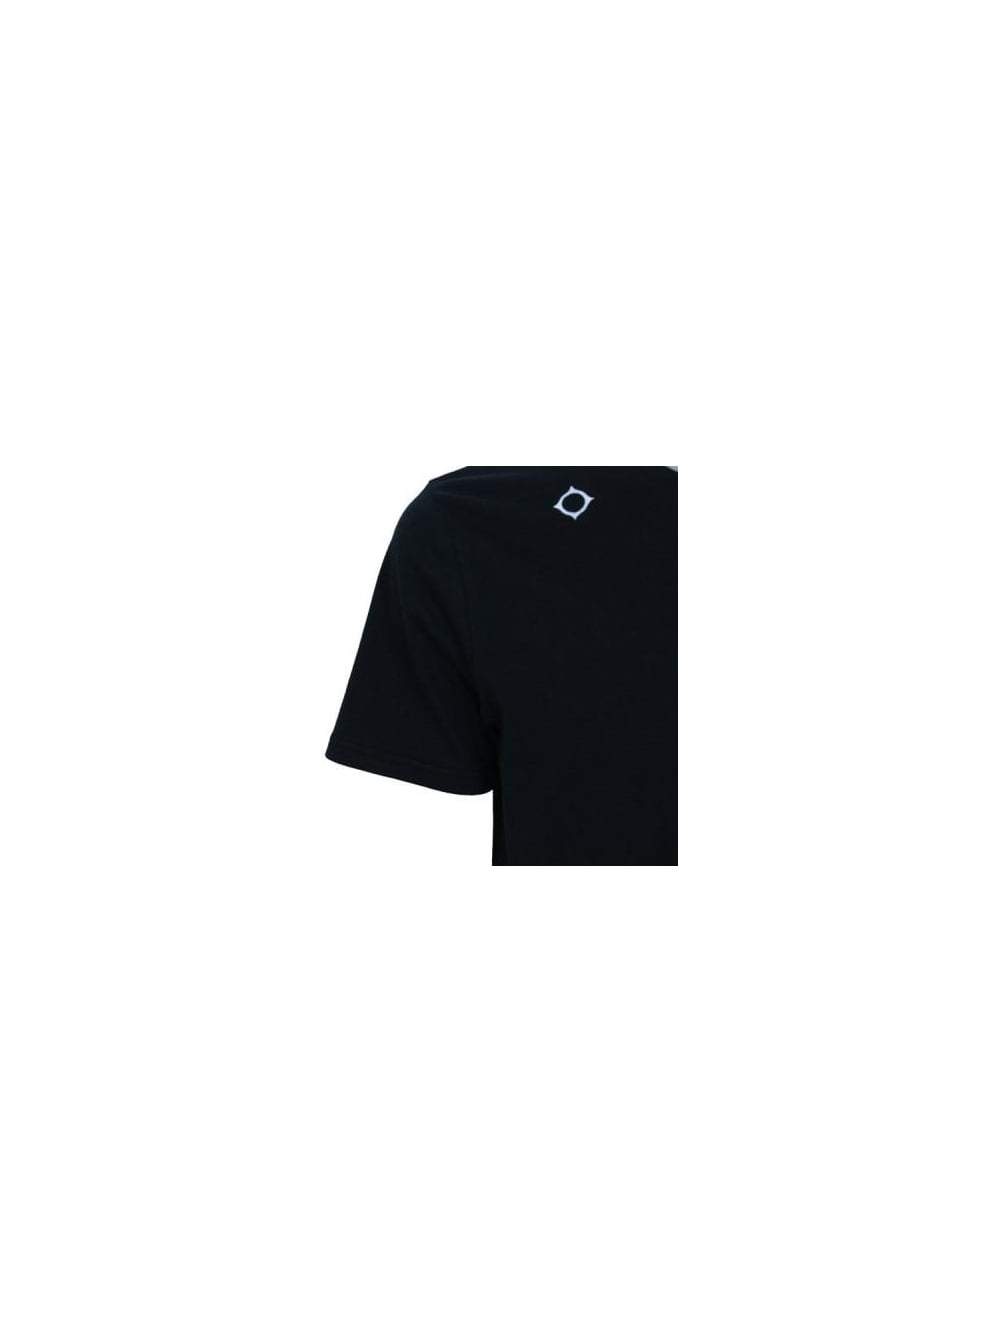 Black Compass Logo - MA-Strum Compass Logo Kit Issue T.Shirt in Jet Black - Northern Threads